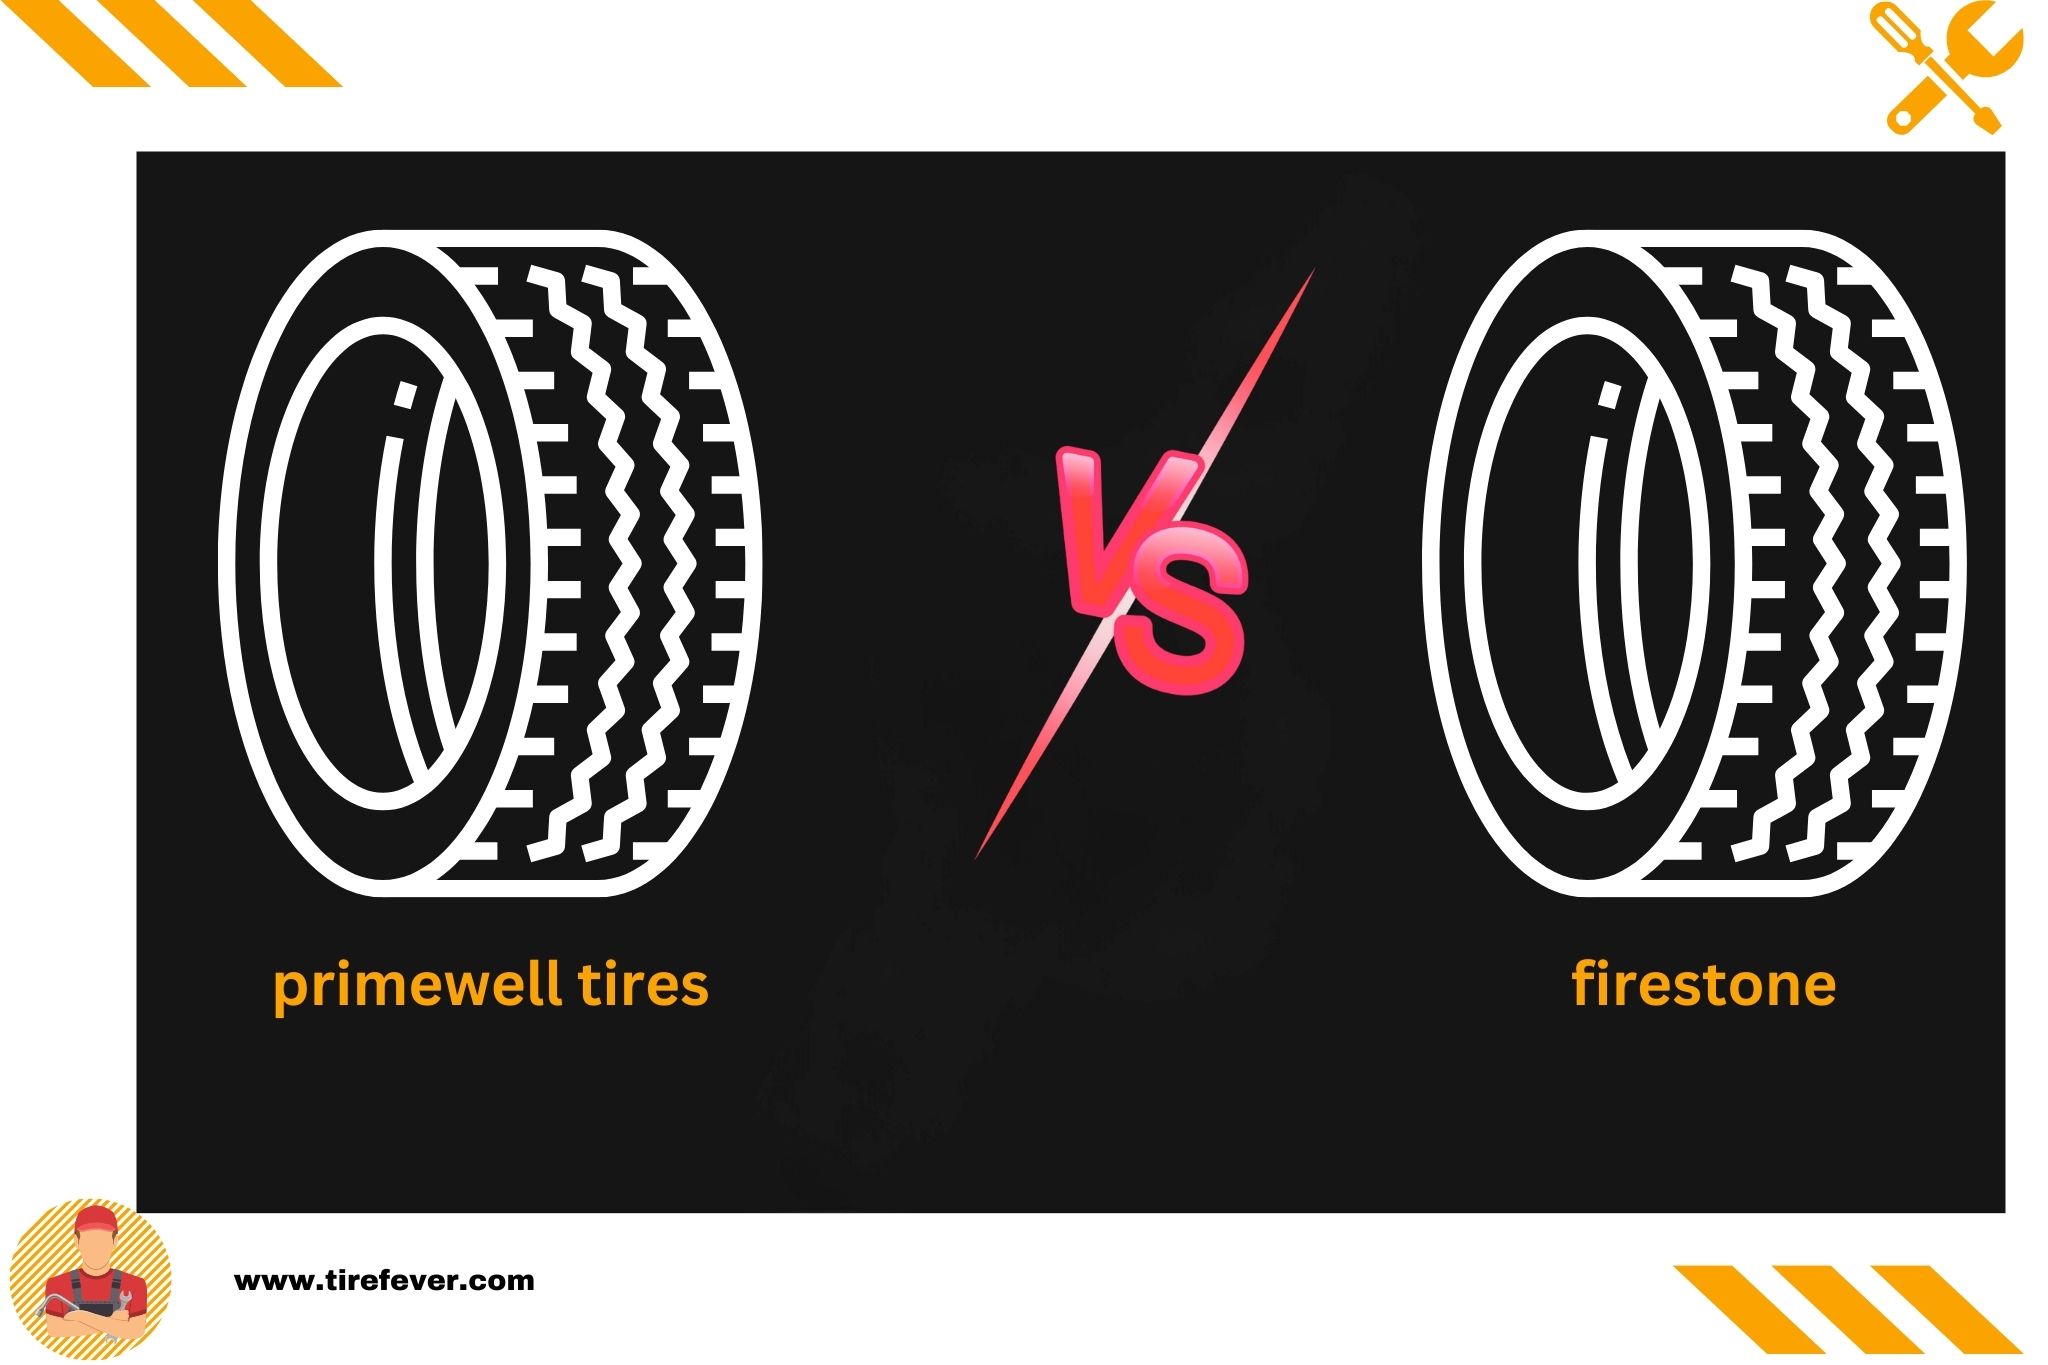 primewell tires vs firestone